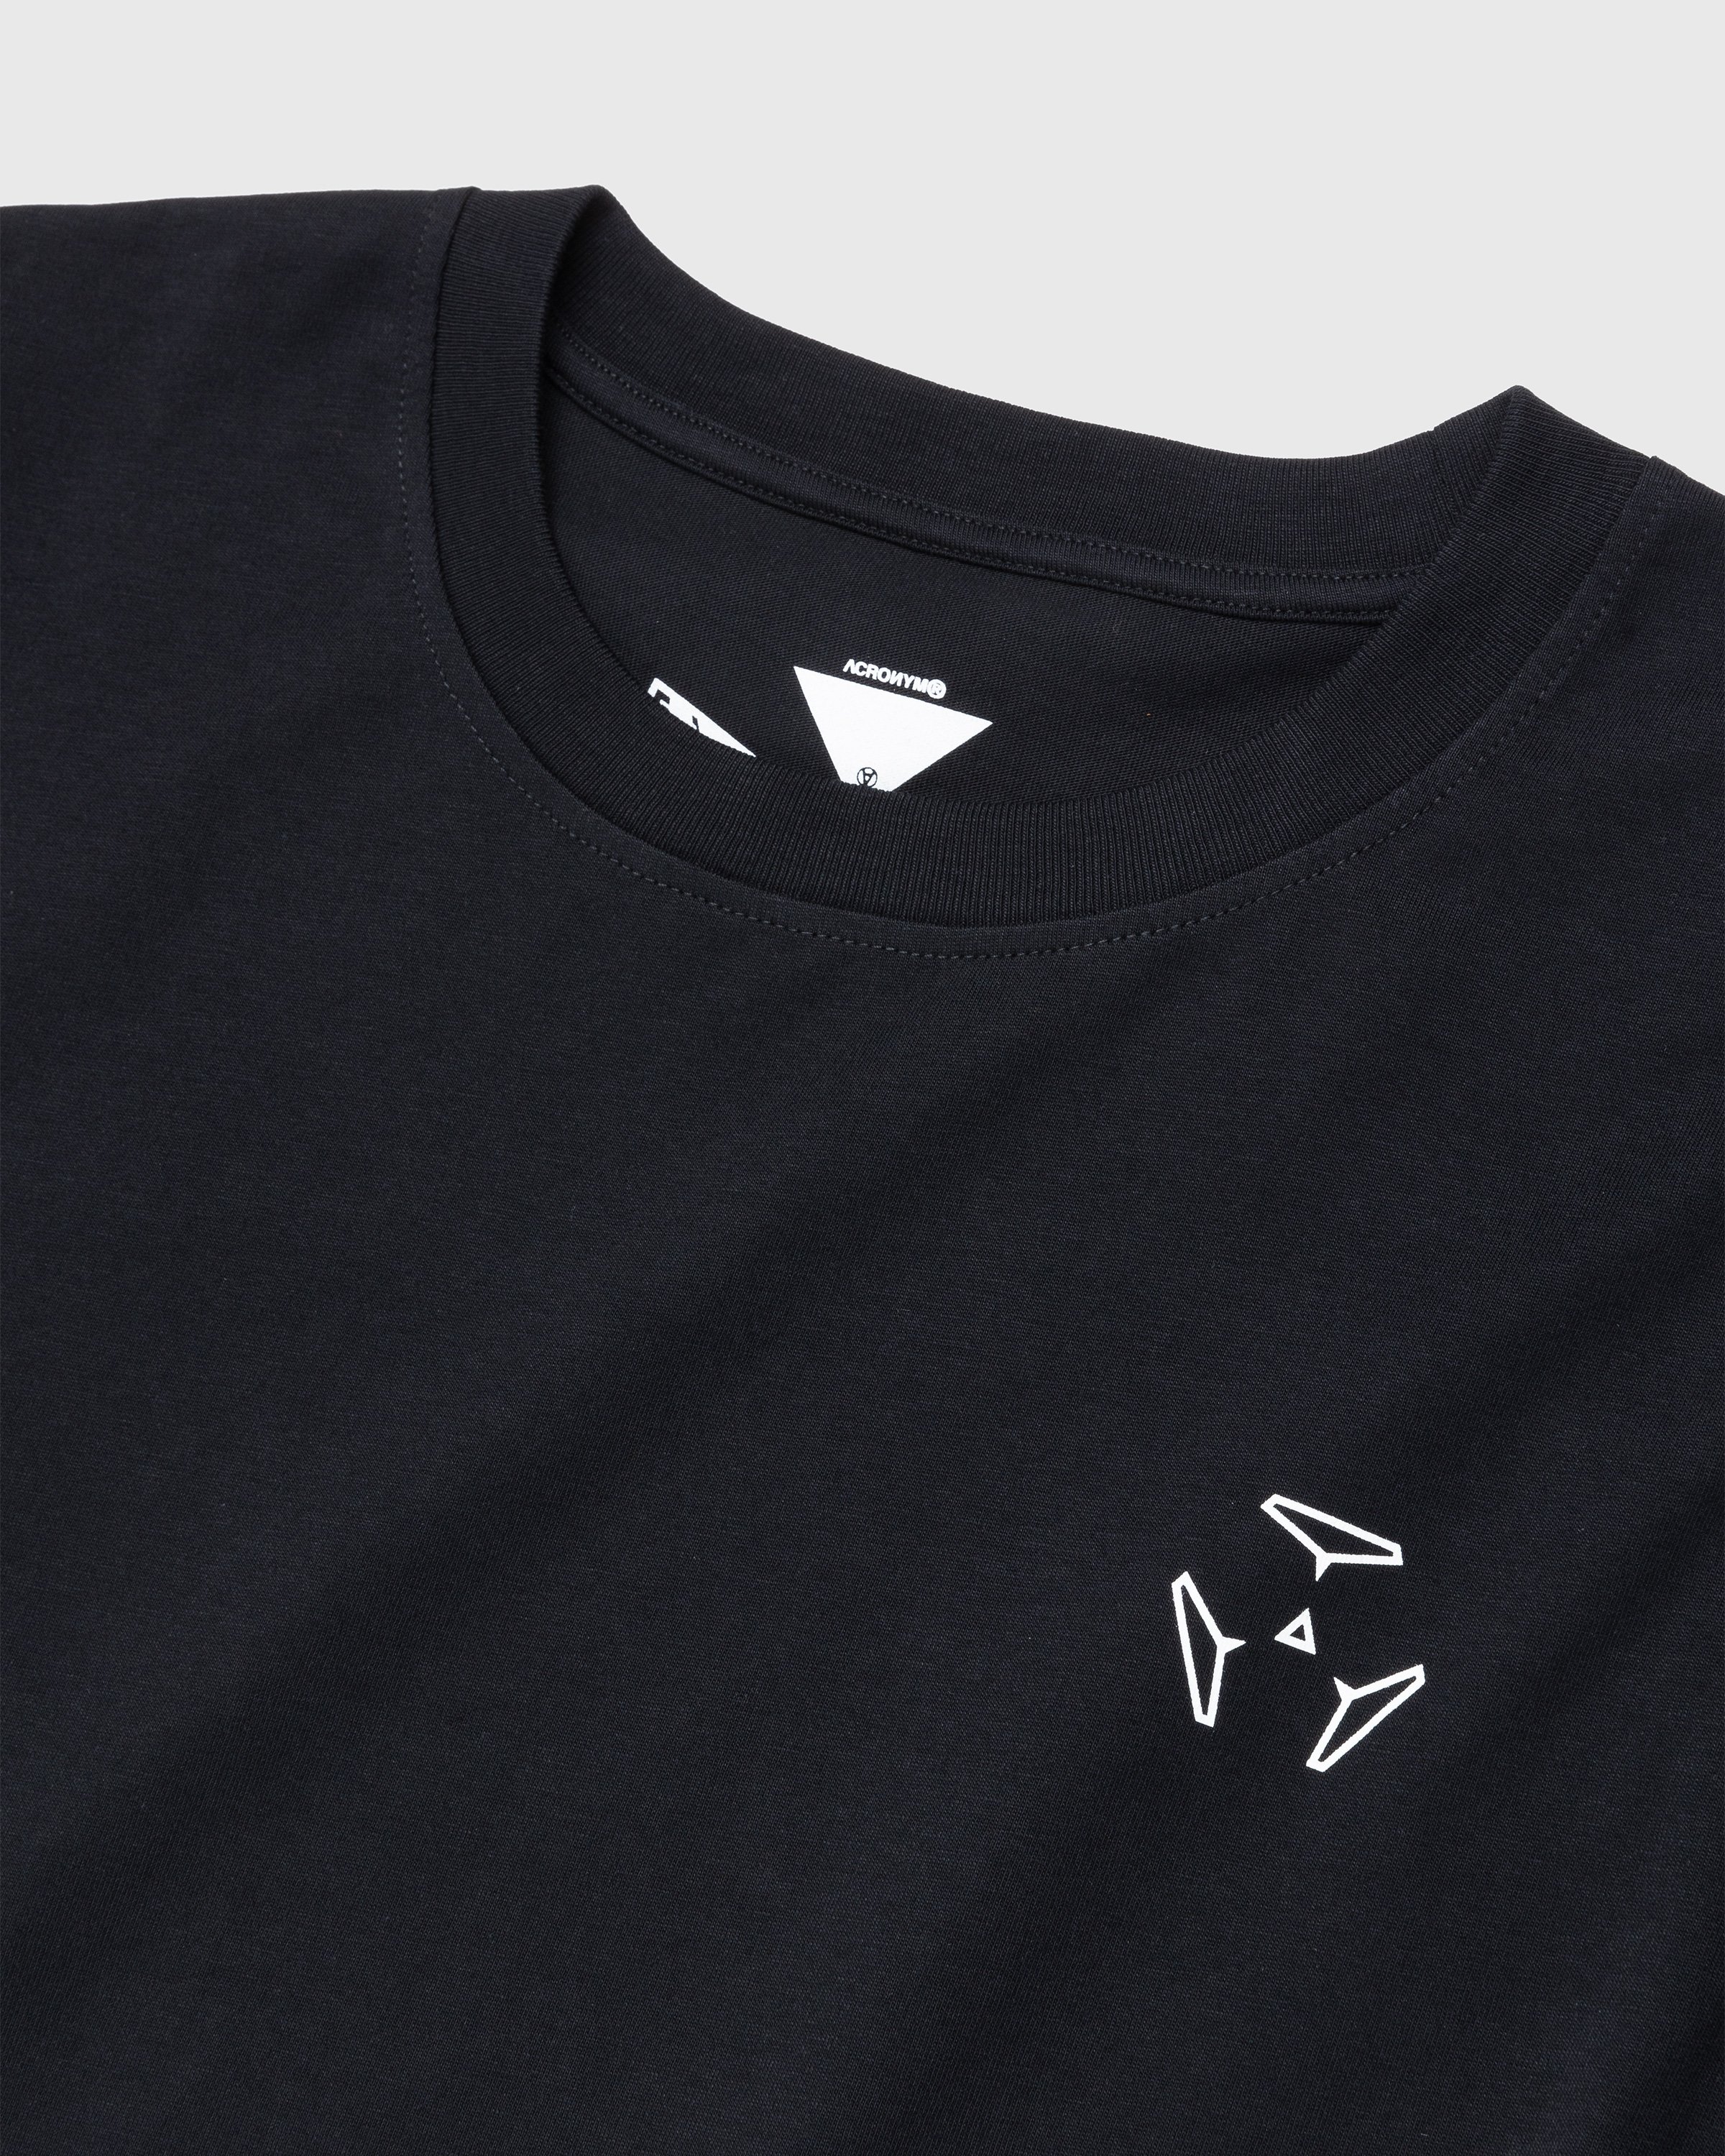 ACRONYM - S29-PR-B Organic Cotton Longsleeve T-Shirt Black - Clothing - Black - Image 6